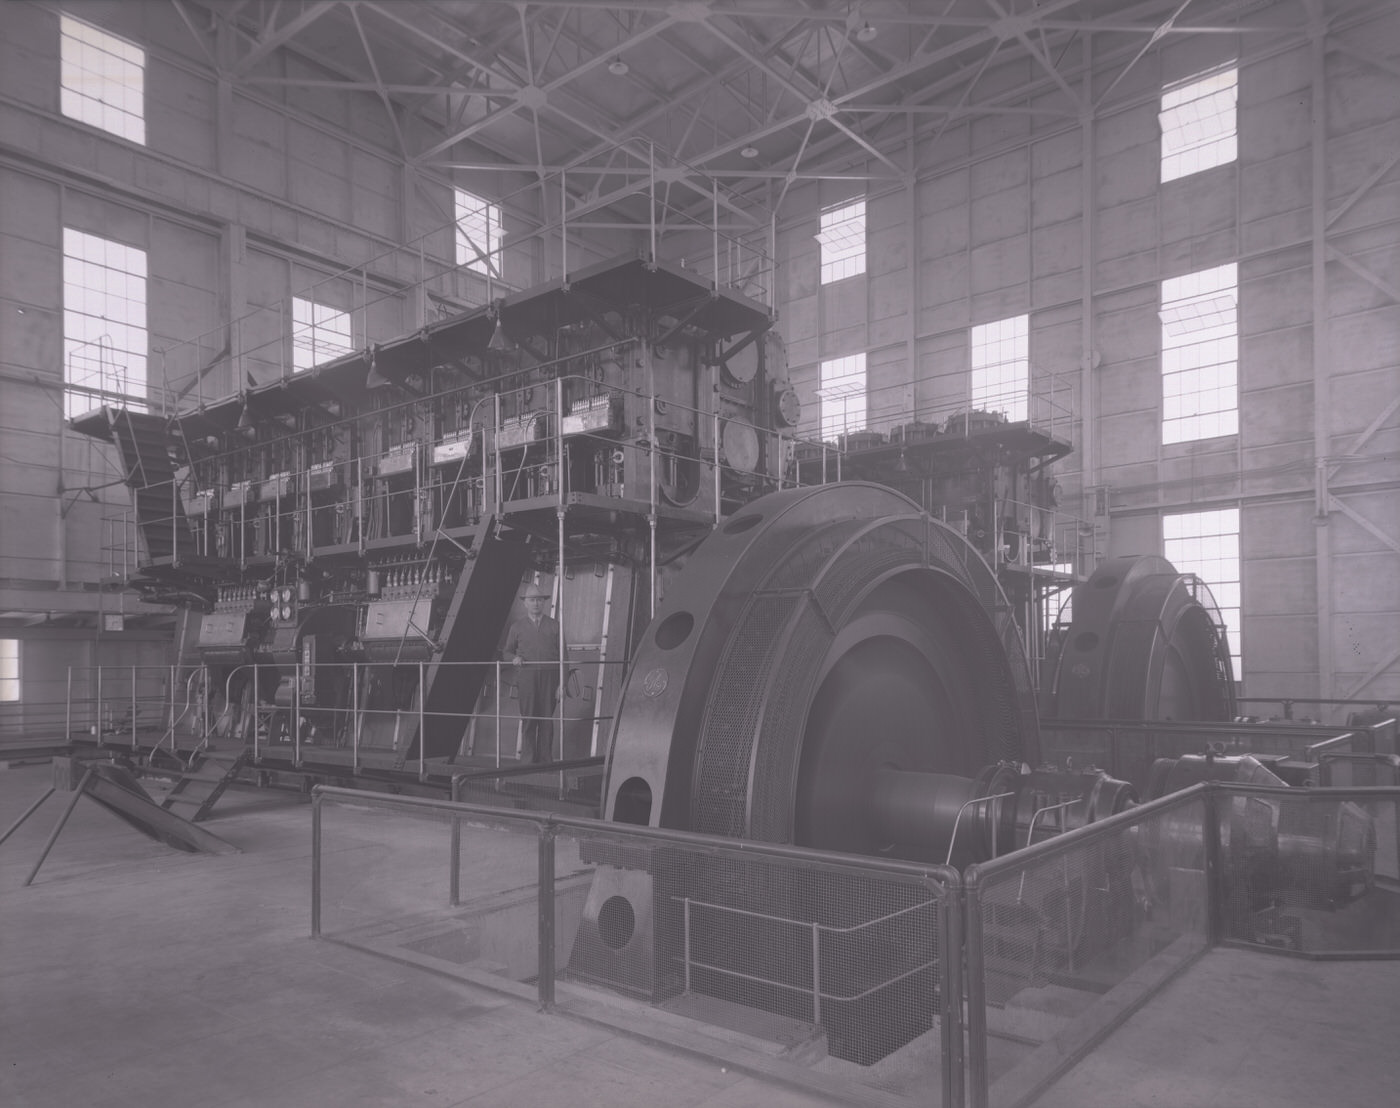 Diesel Plant Interior, 1900s